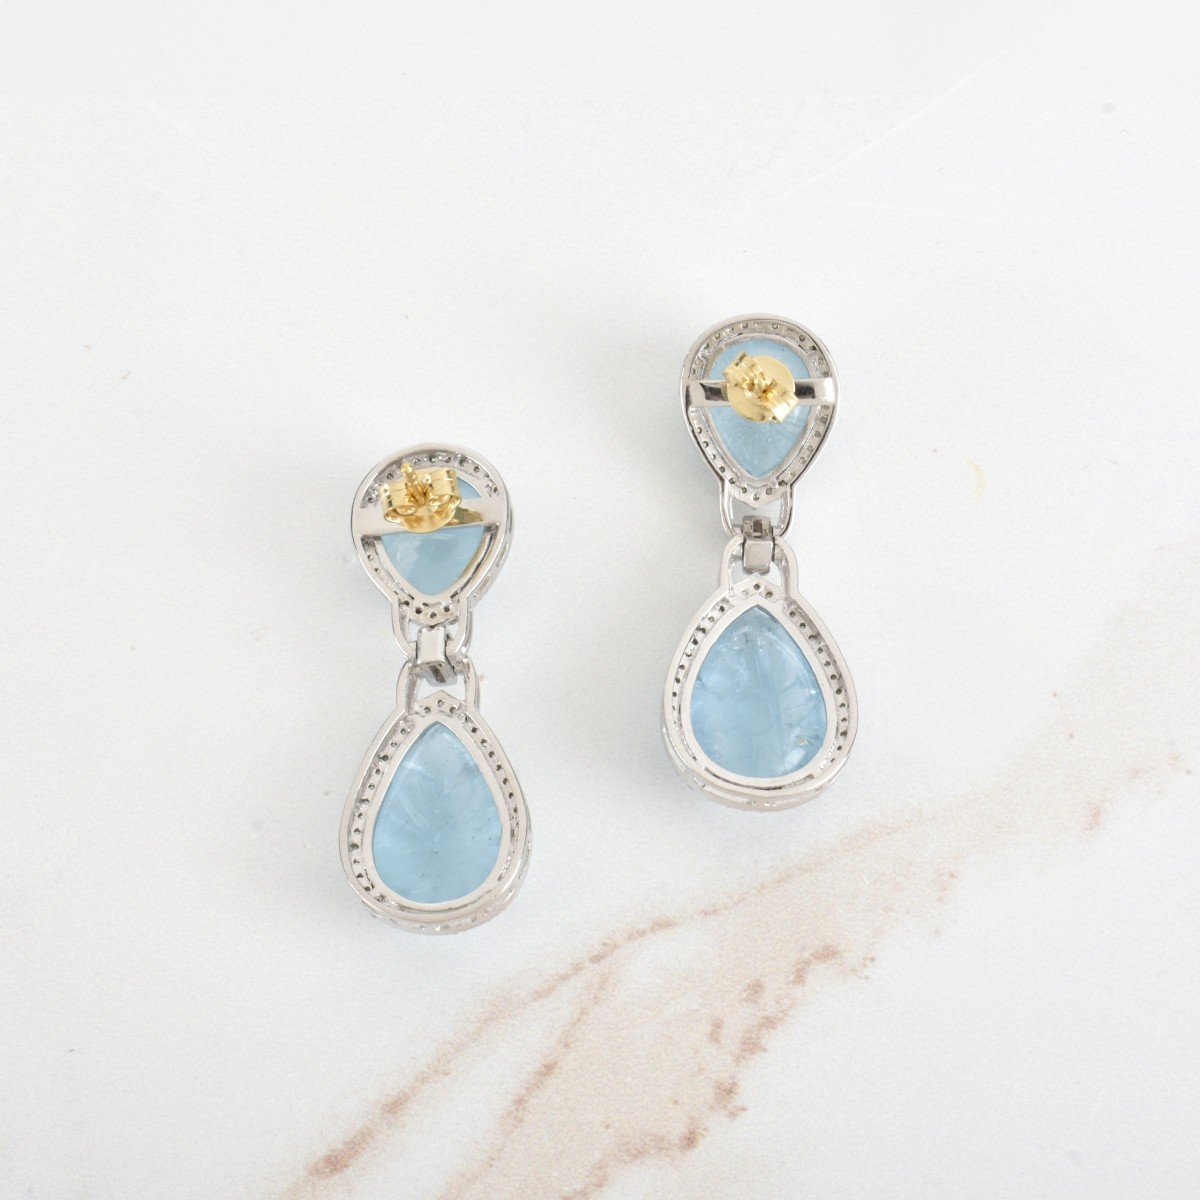 Aquamarine, Diamond and Silver Earrings